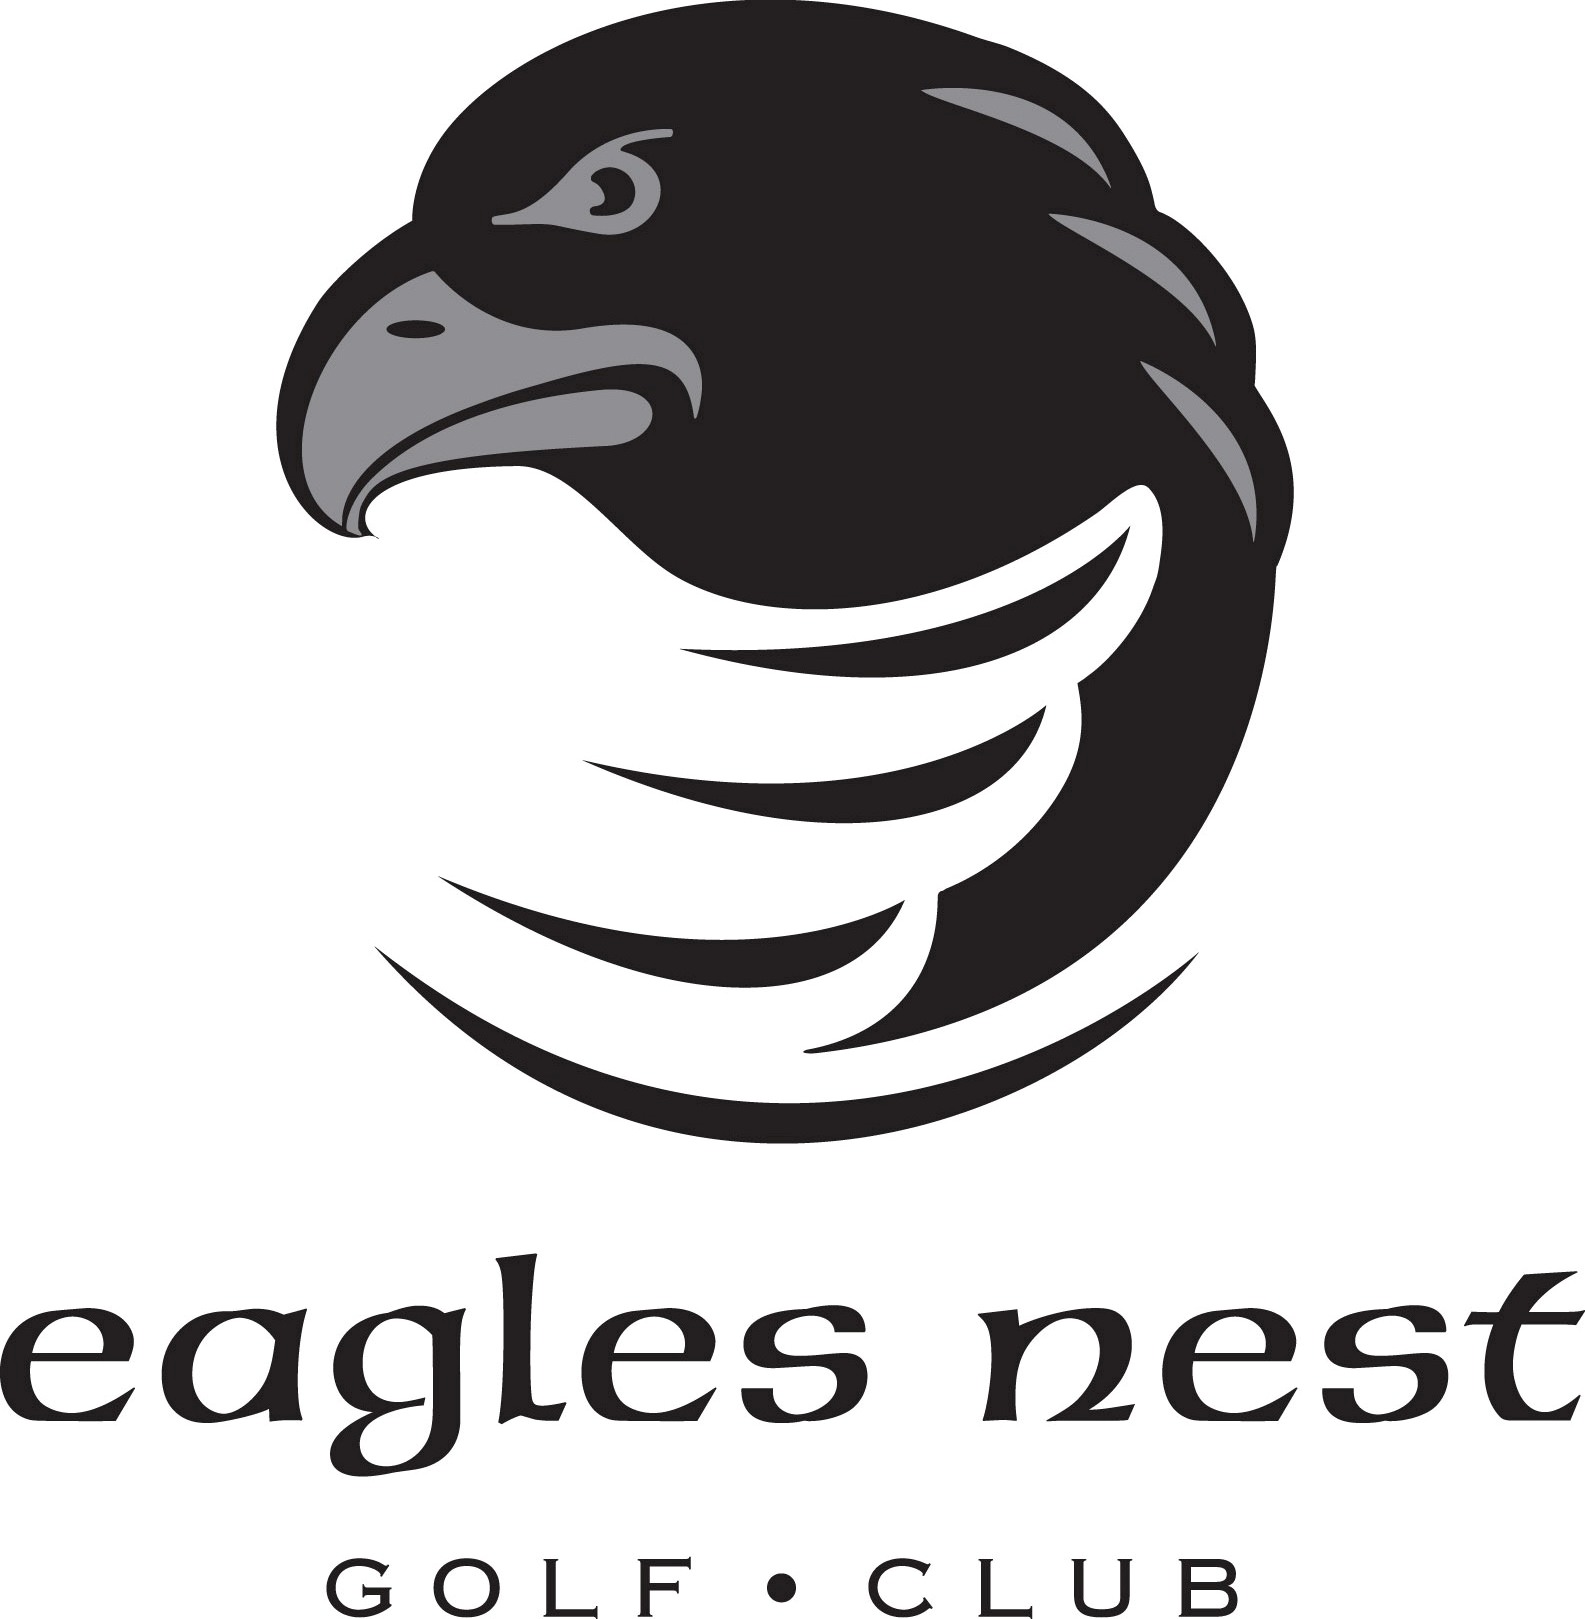 Eagles Nest Golf Course